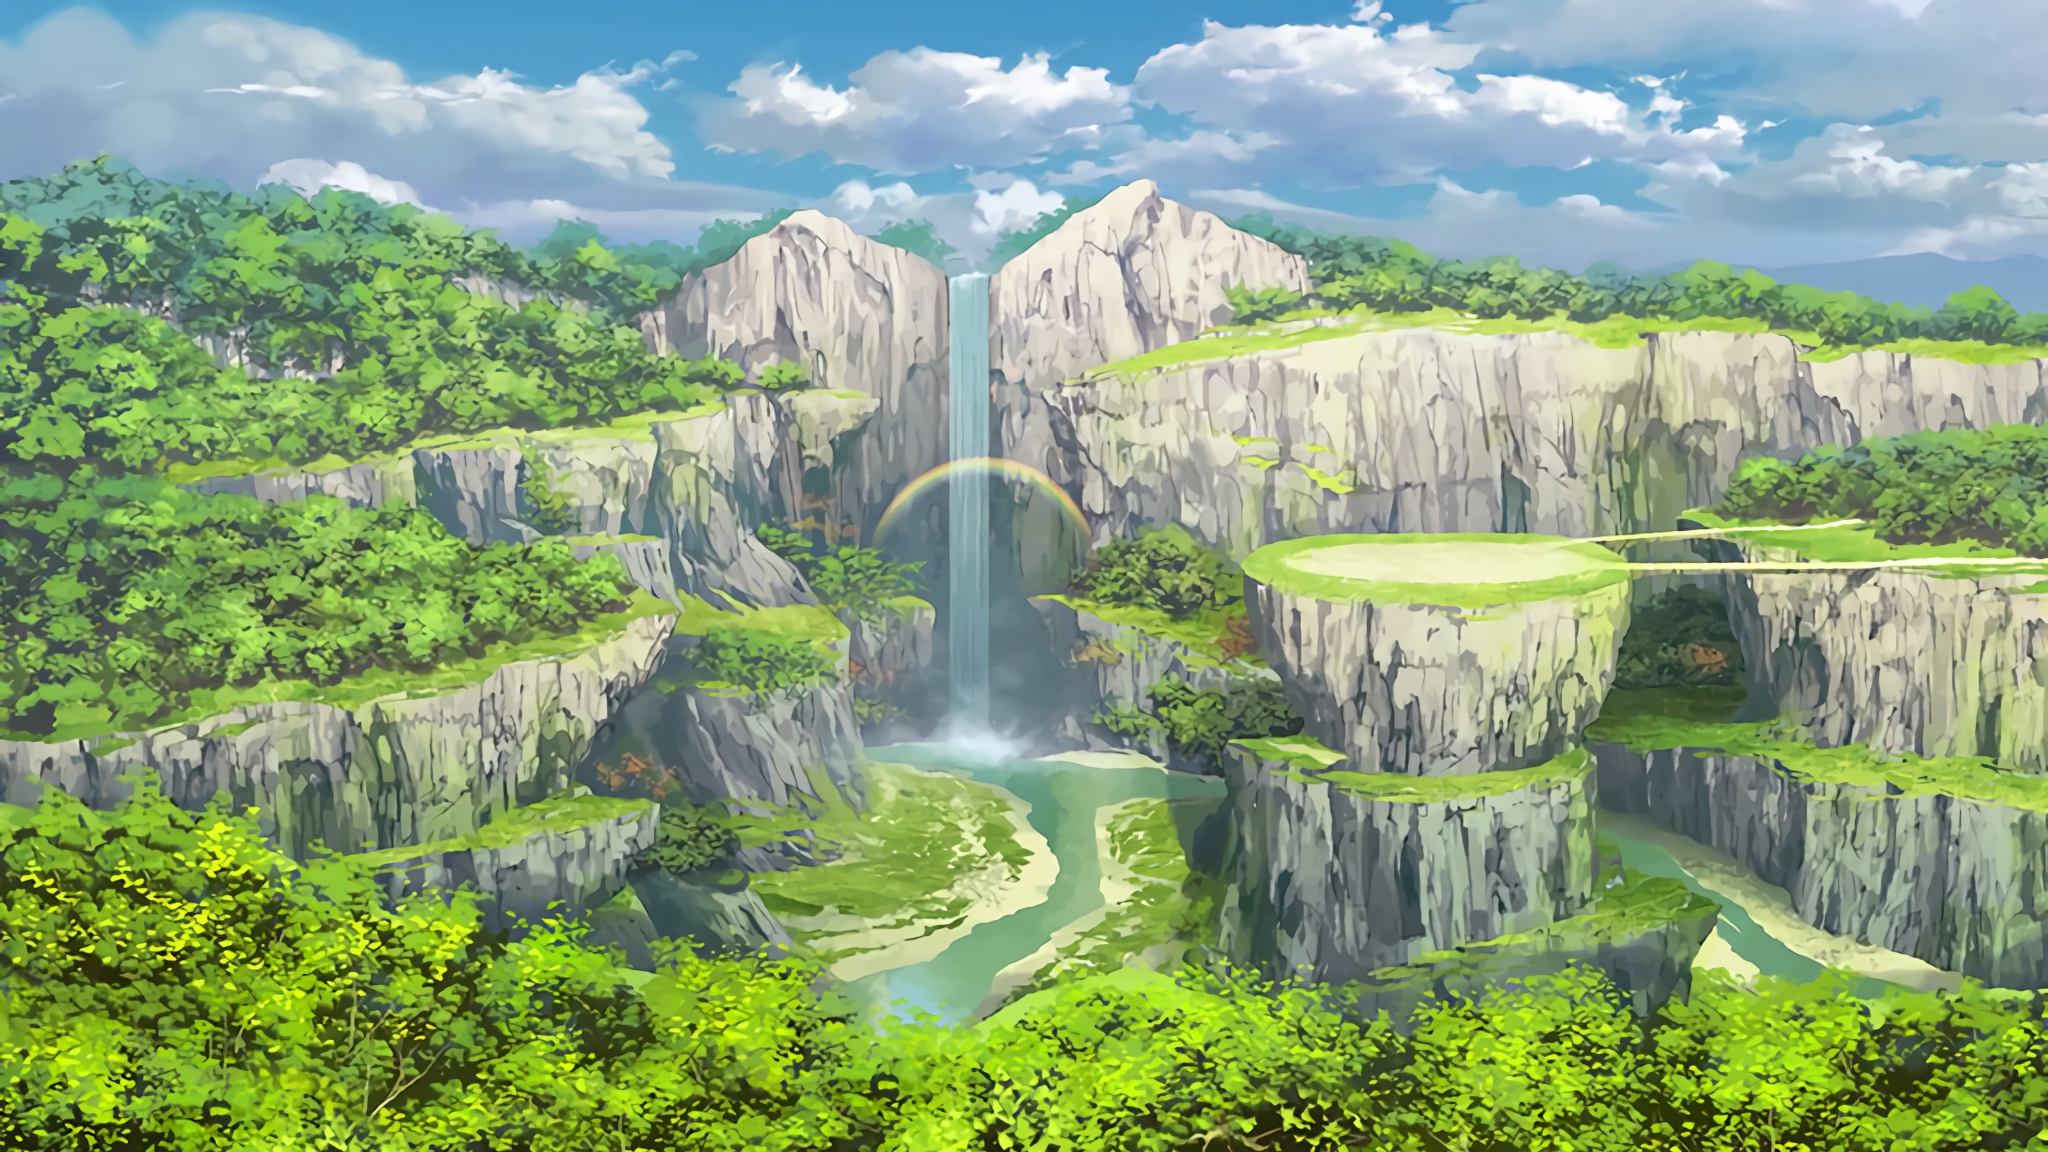 Descarga gratuita de fondo de pantalla para móvil de Sword Art Online, Animado.